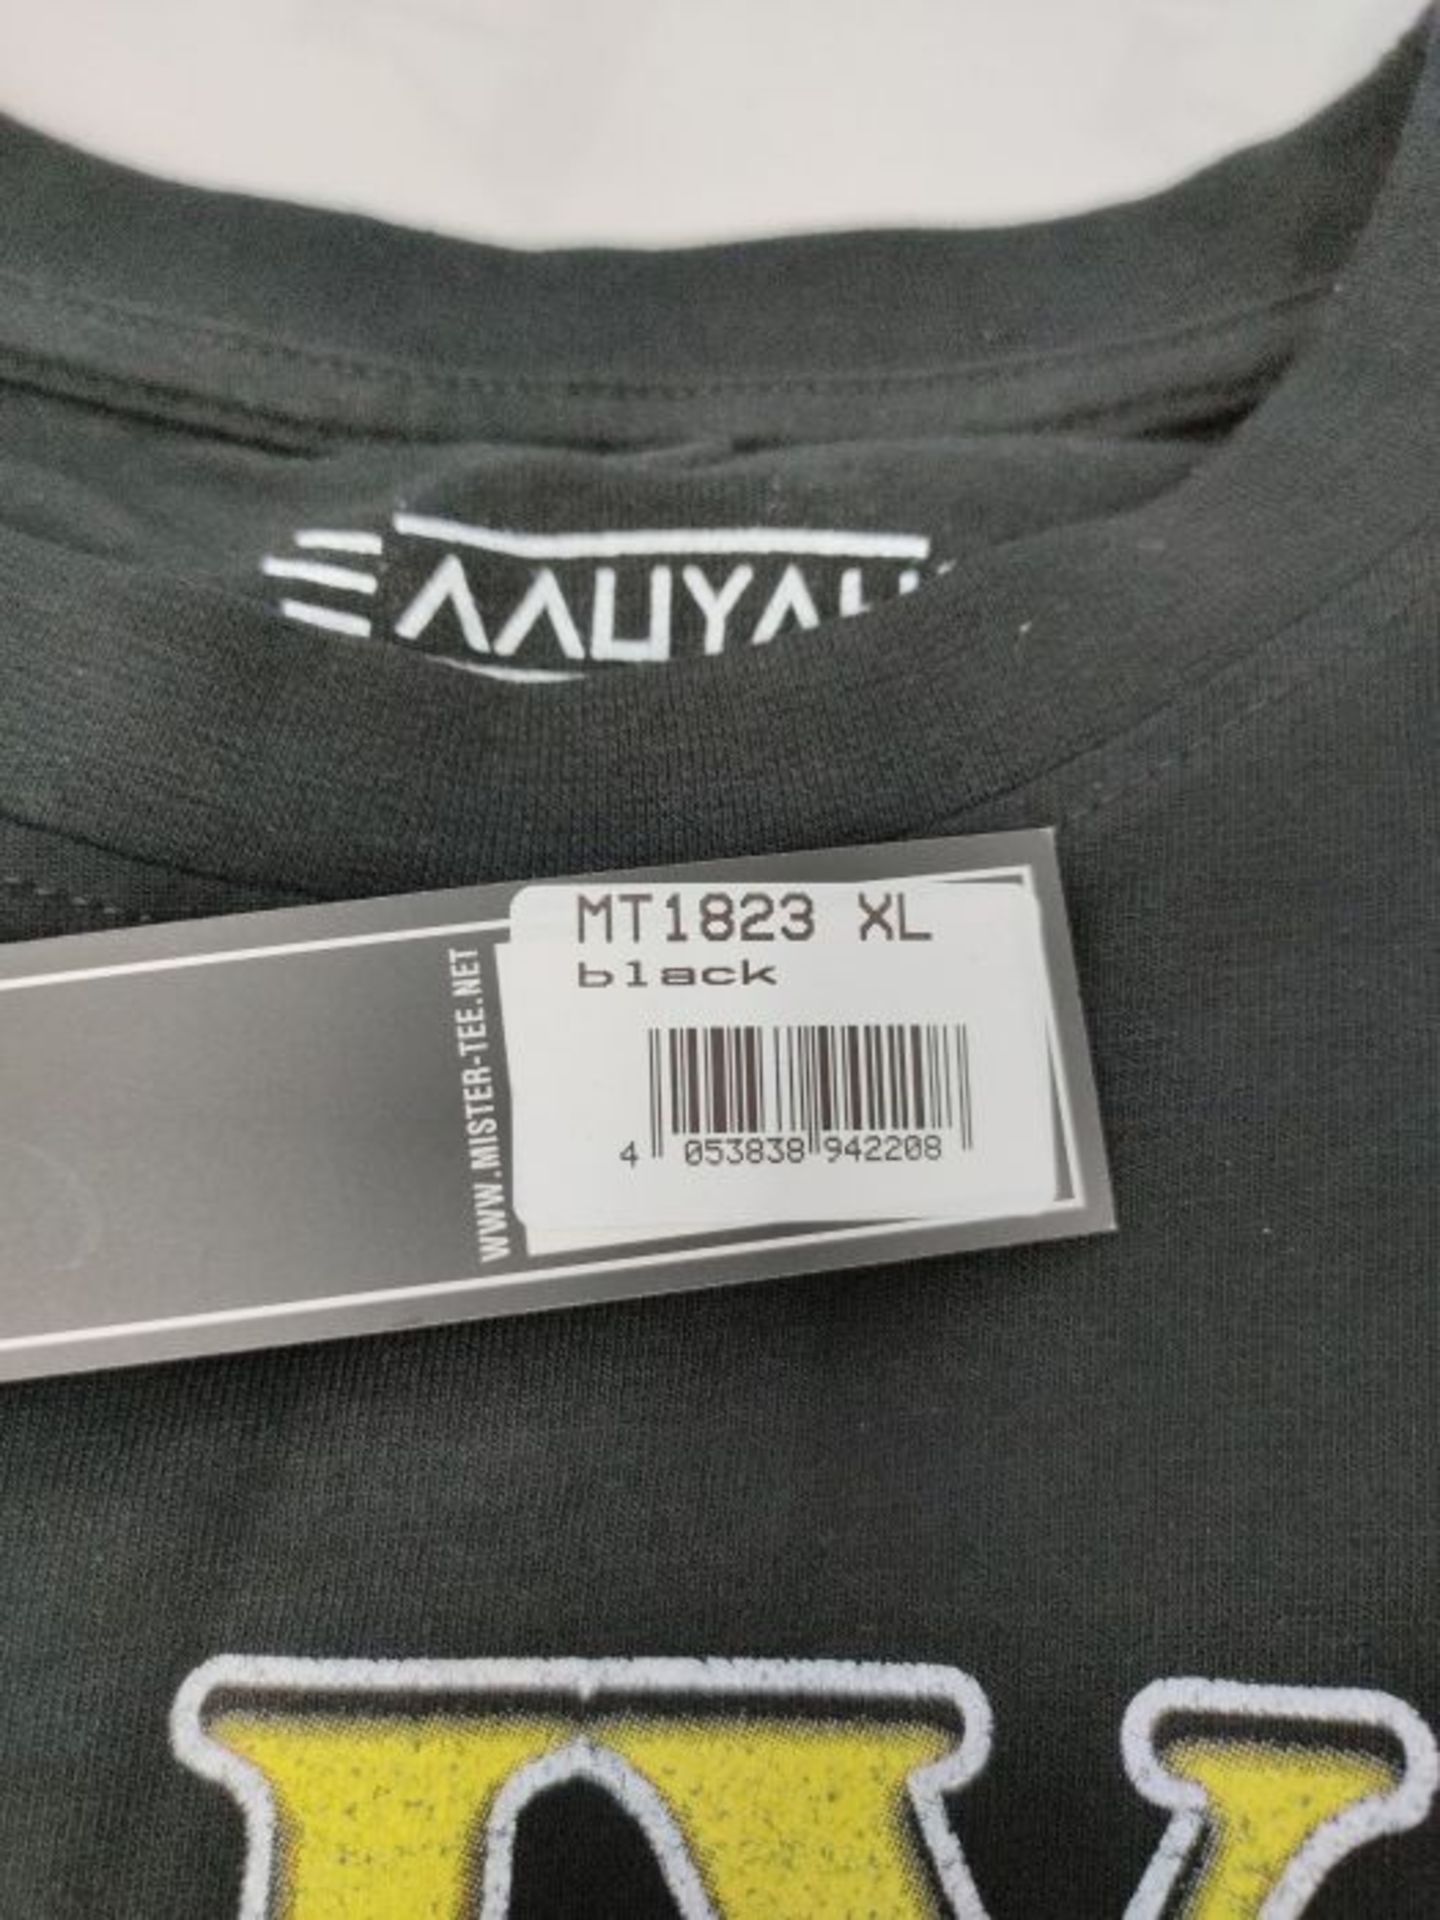 Mister Tee Men's Aaliyah Retro Oversize Tee T-Shirt, Black, XL - Image 3 of 3